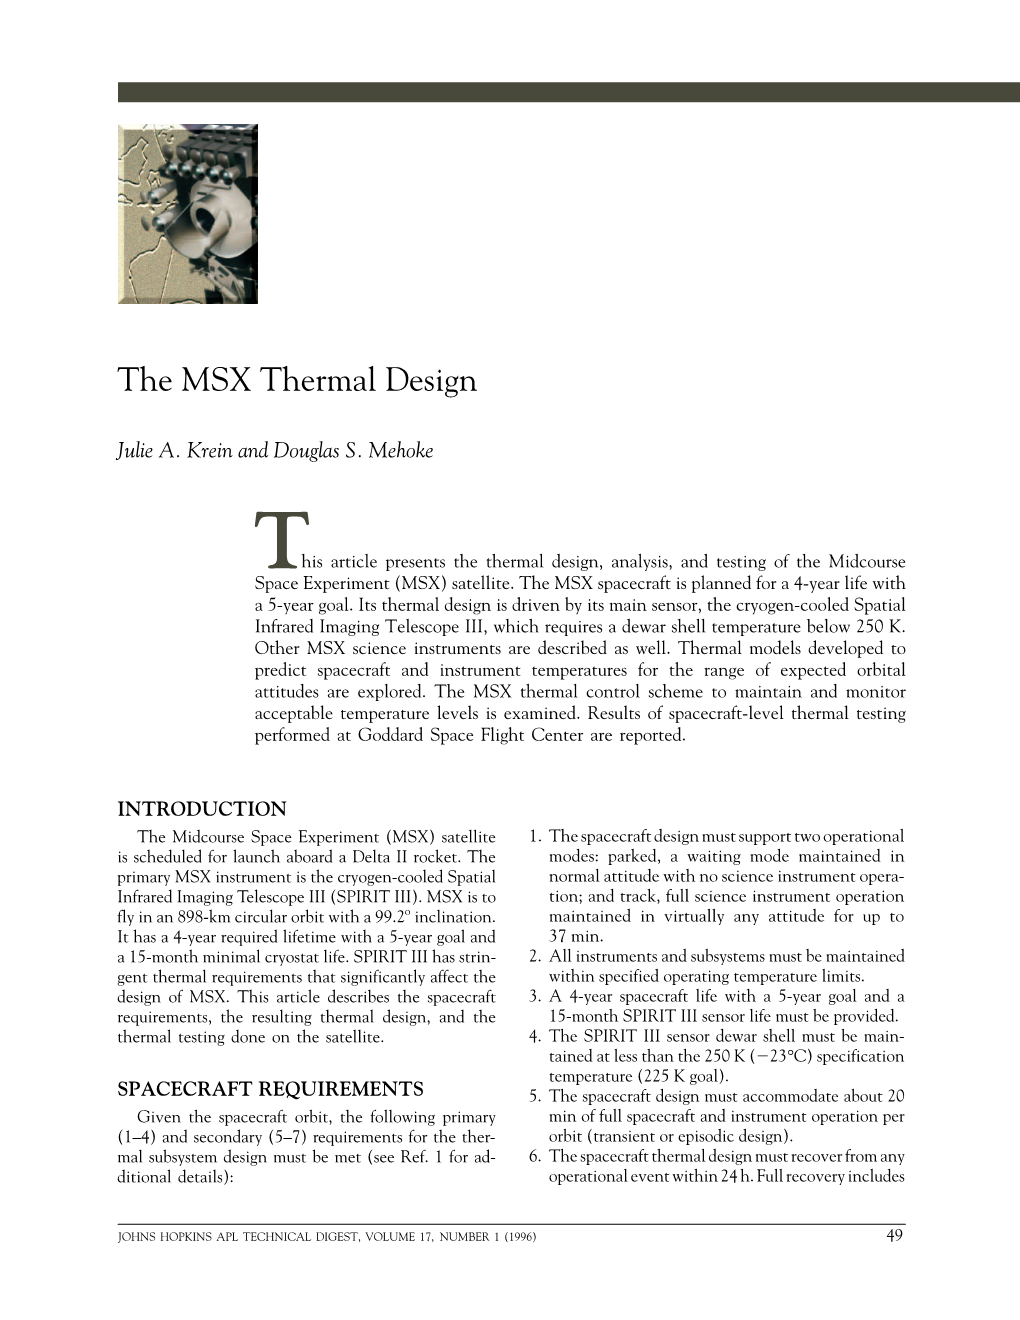 The Msx Thermal Design